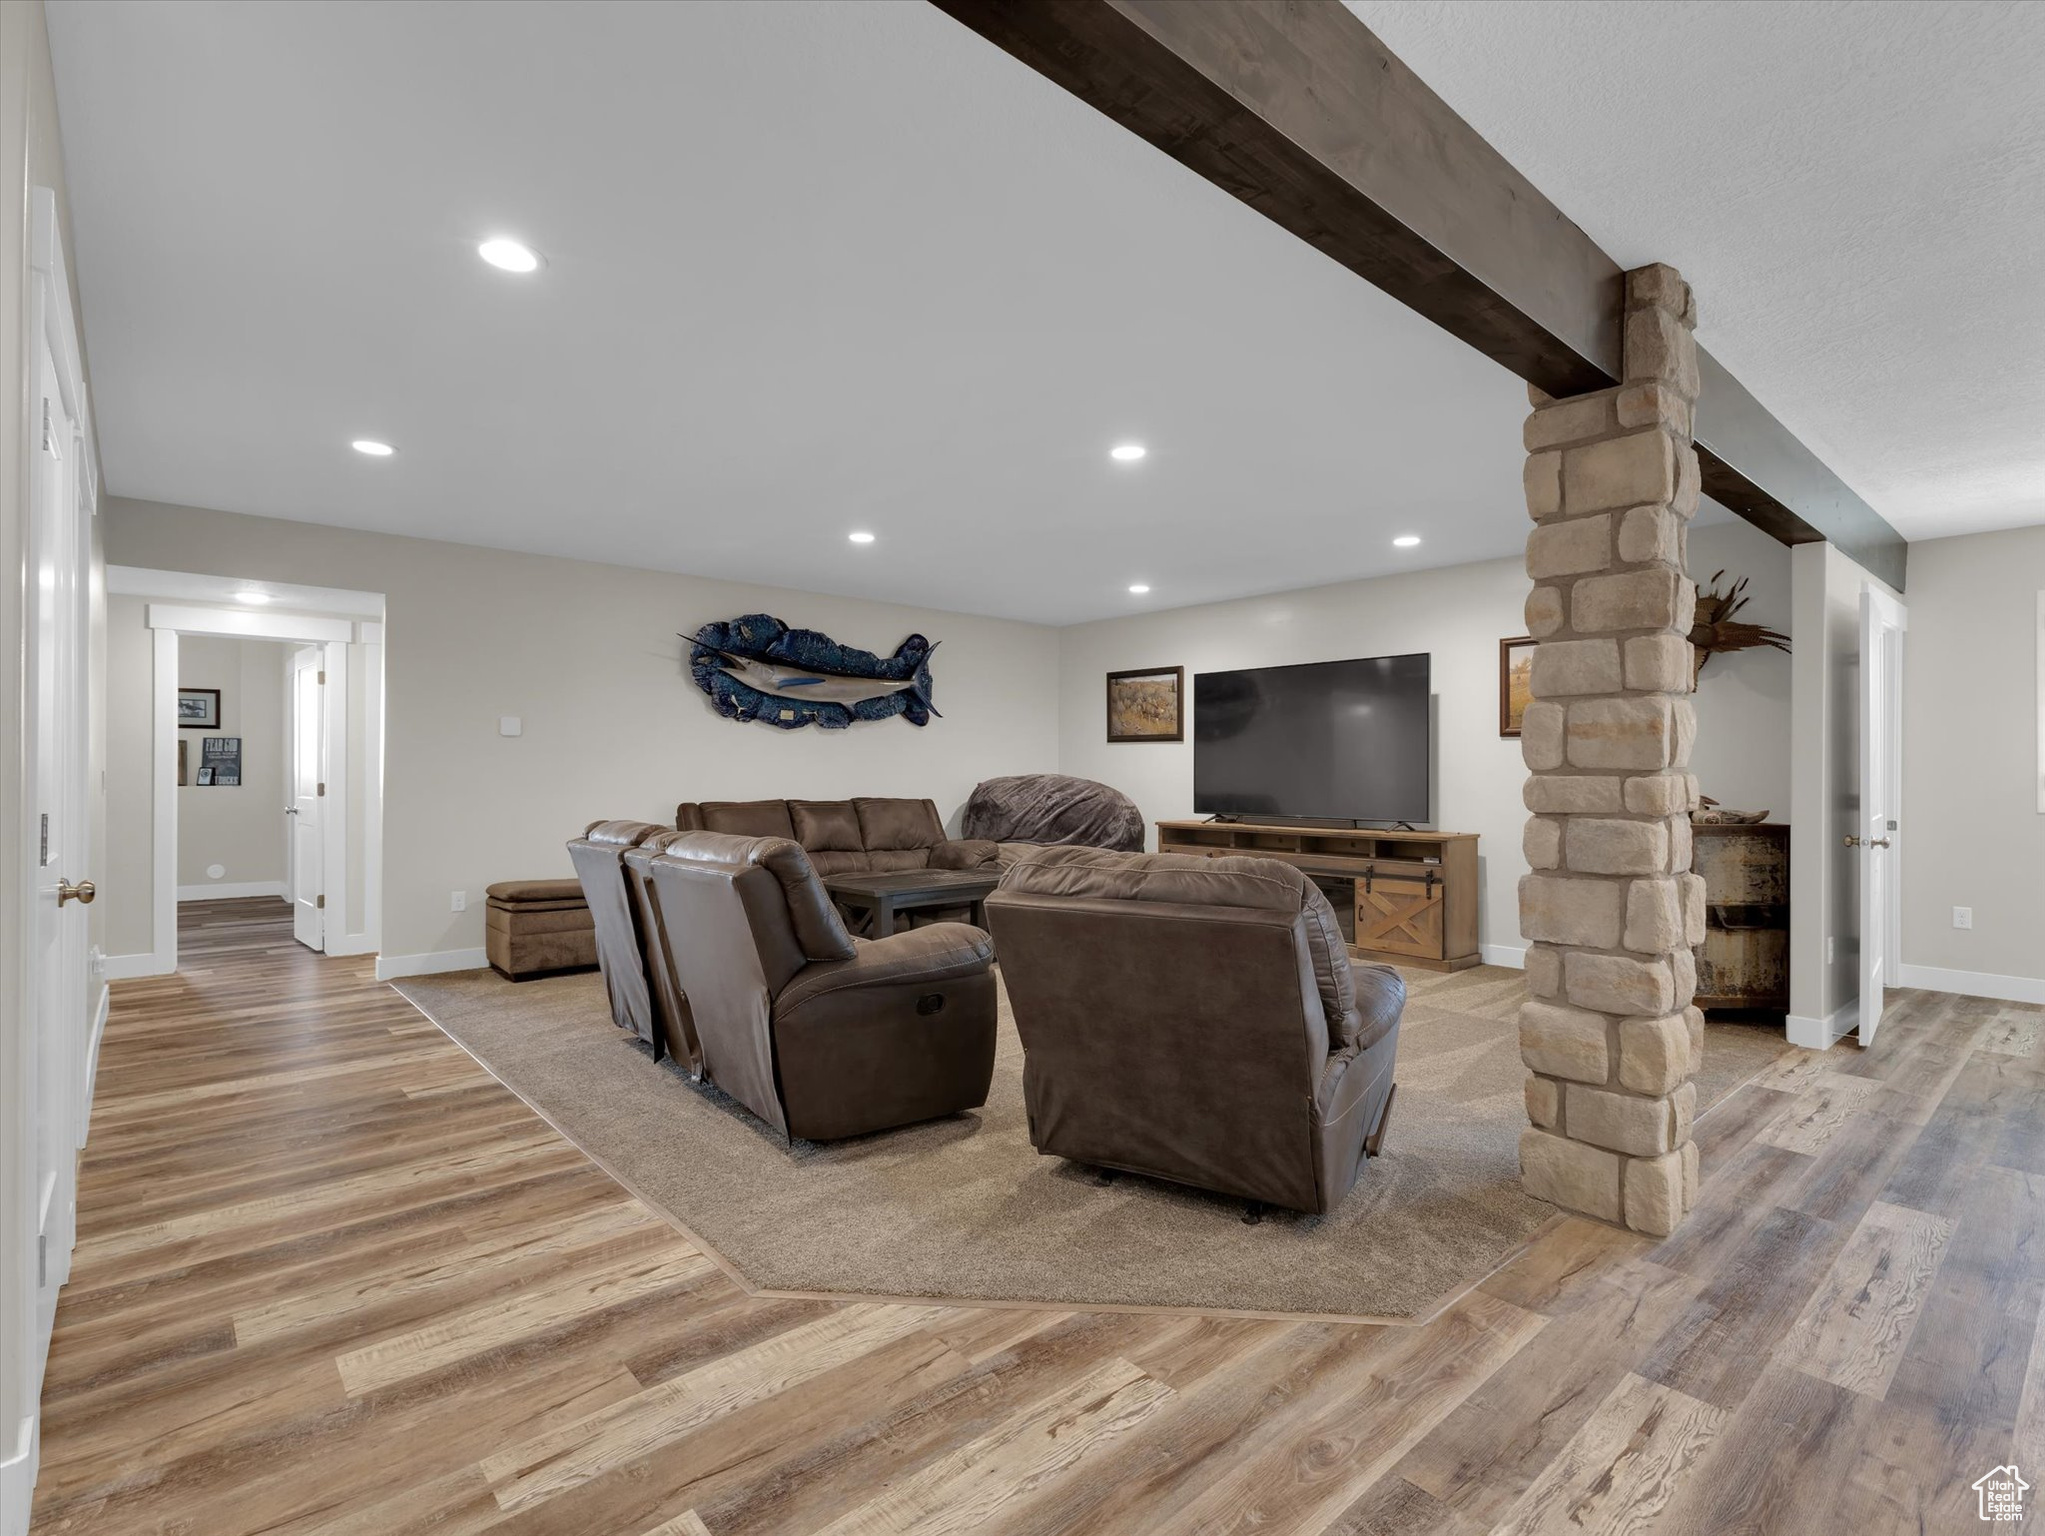 Living room featuring light hardwood / wood-style flooring, ornate columns, and beam ceiling